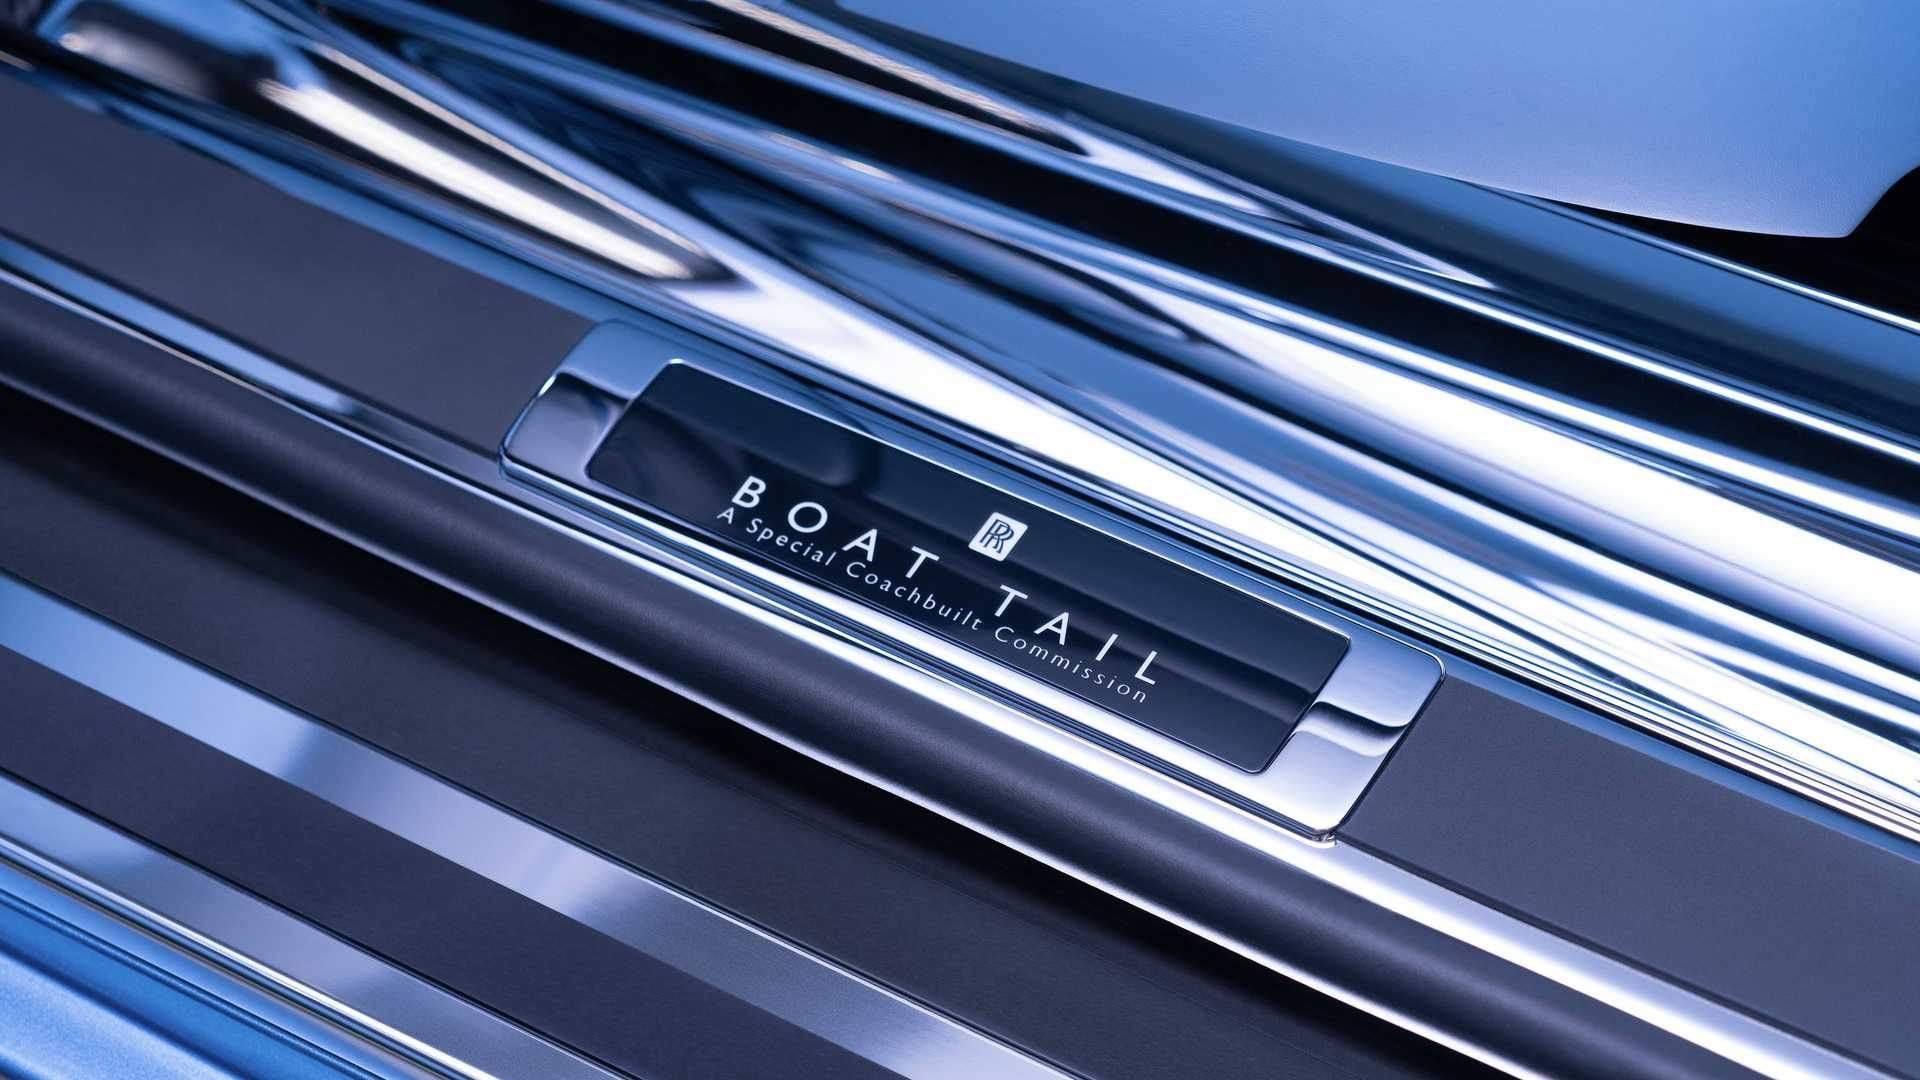 بدنه رولزرویس بوت تیل / Rolls-Royce Boat Tail آبی رنگ